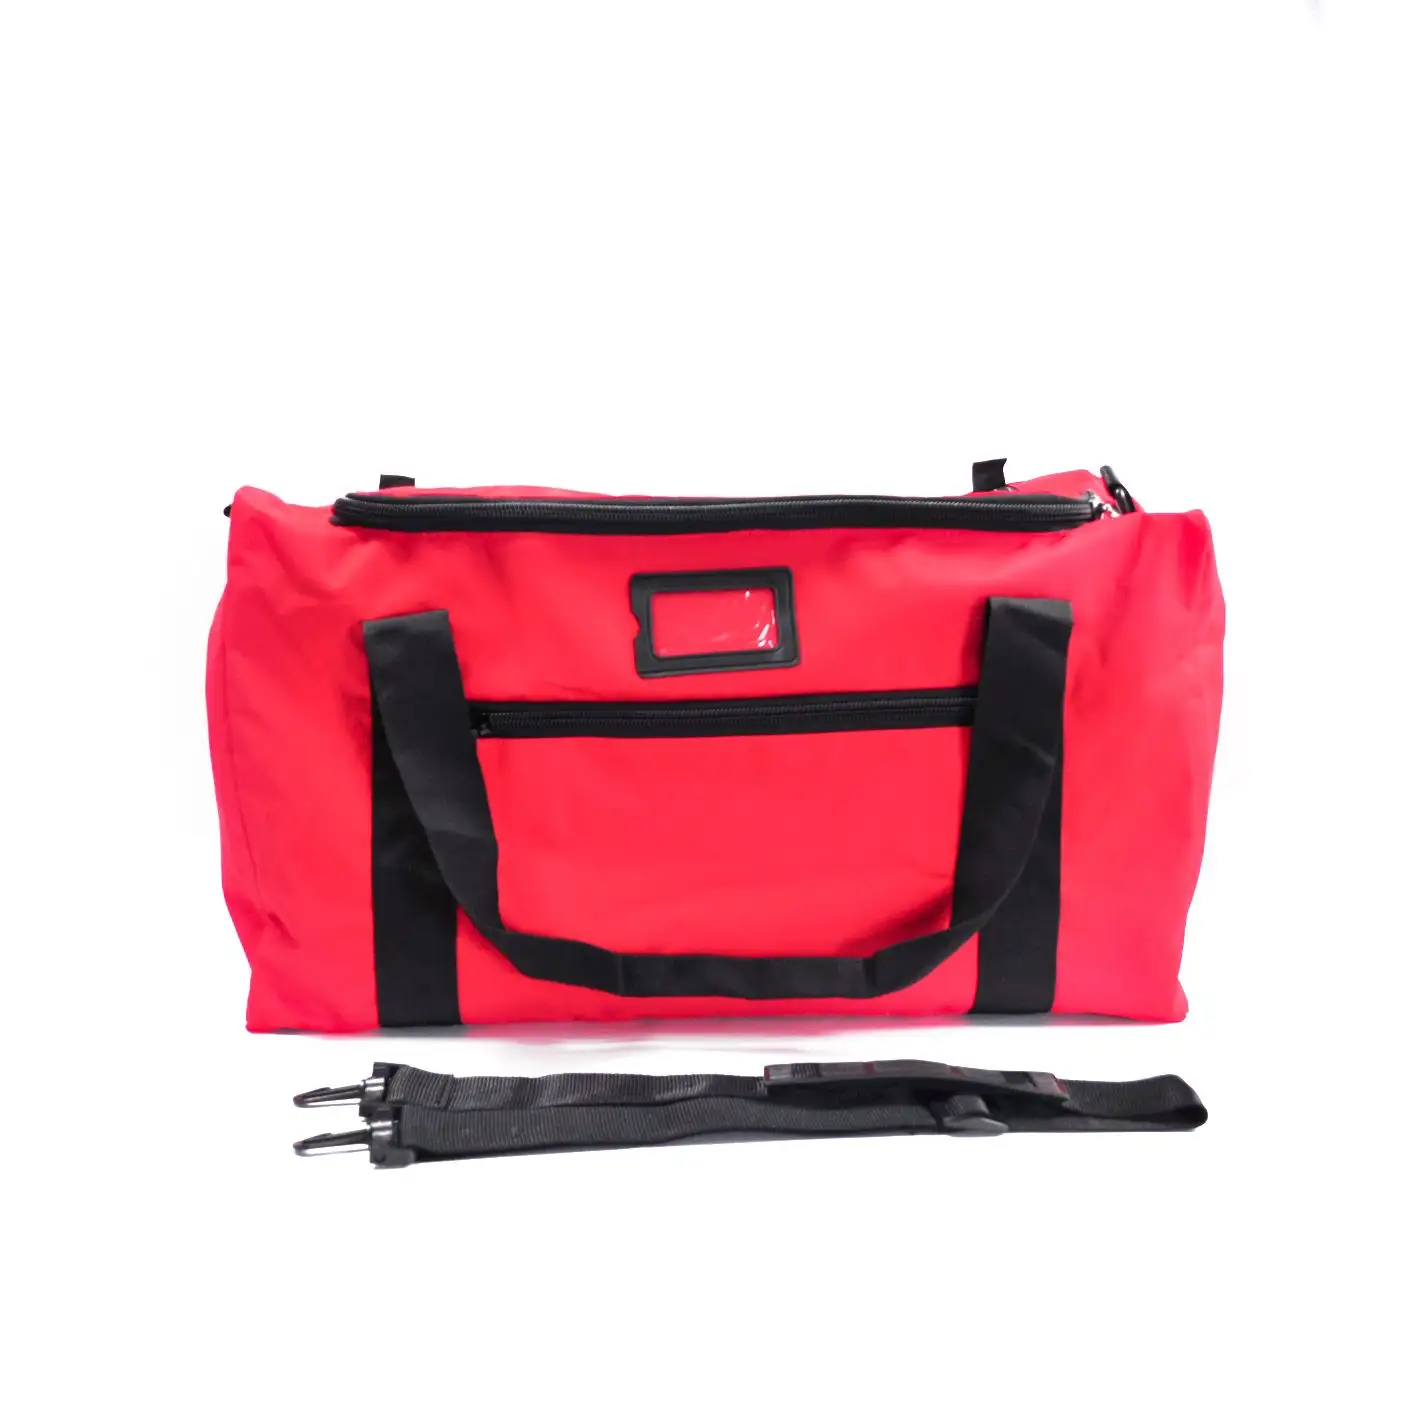 New Fire Fighter Rescue Duffel Fireman Gear Multipurpose Travel Bag